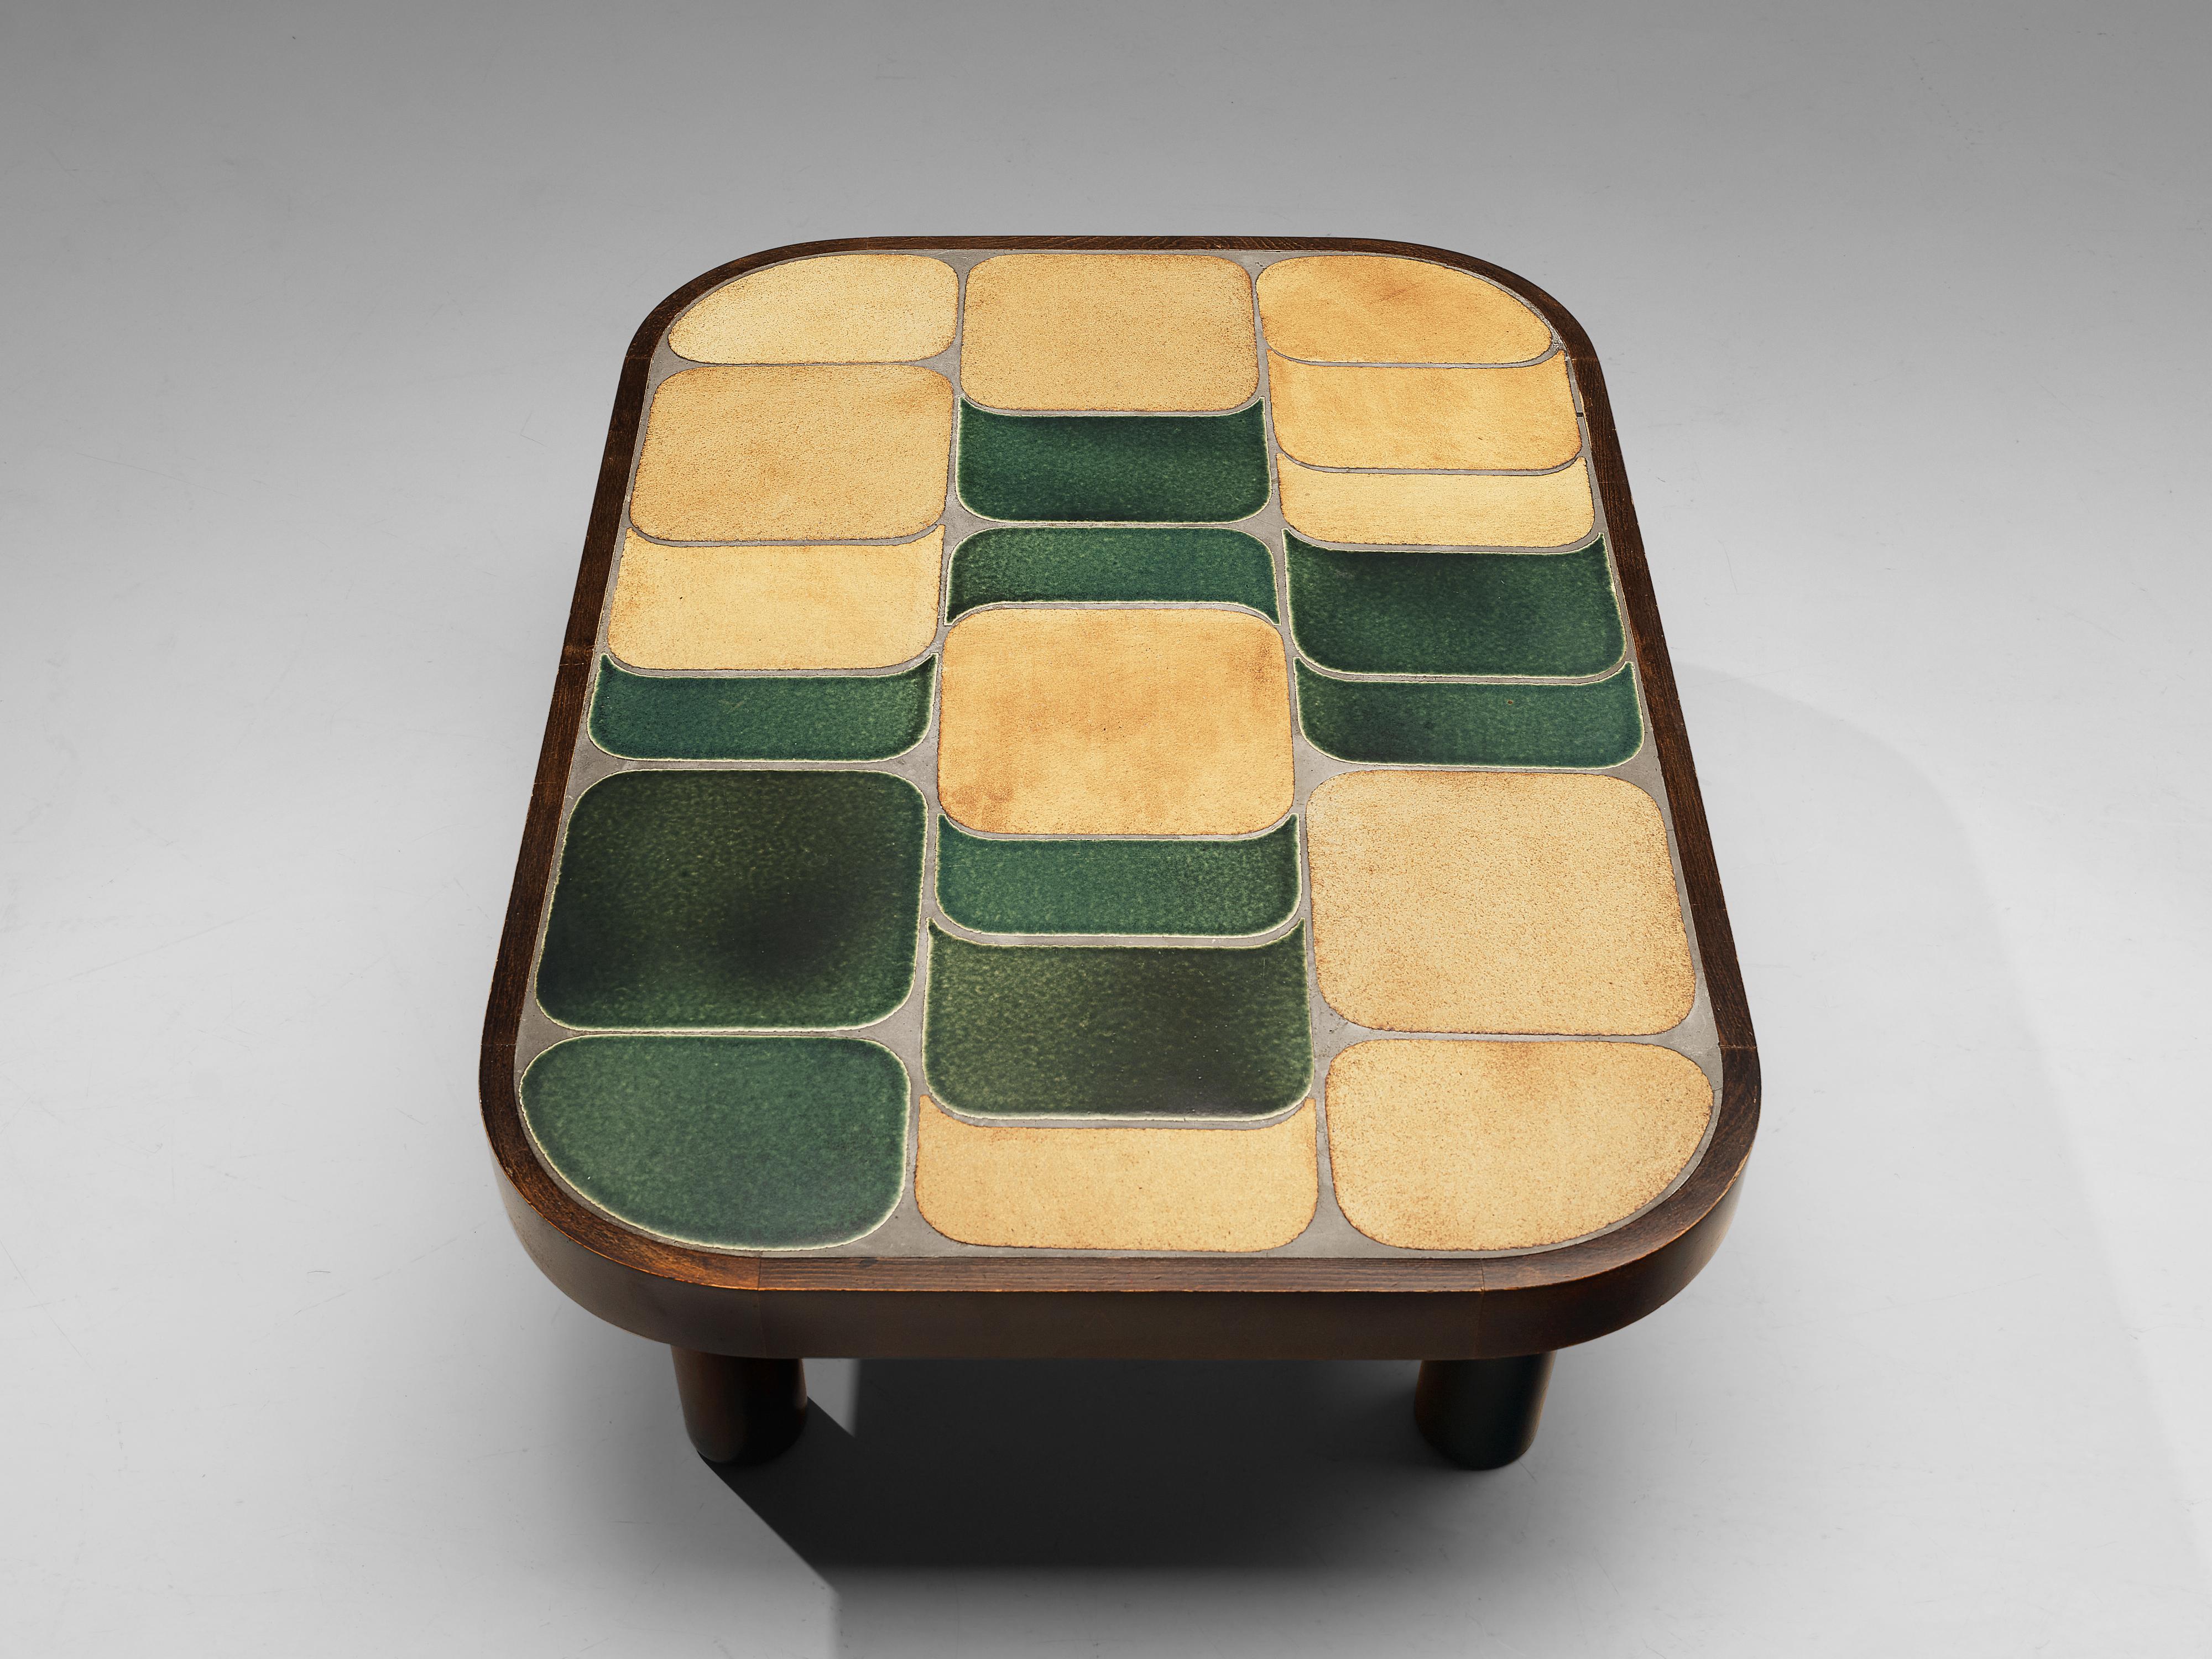 Roger Capron ‘Shogun’ Coffee Table in Ceramic and Mahogany 1